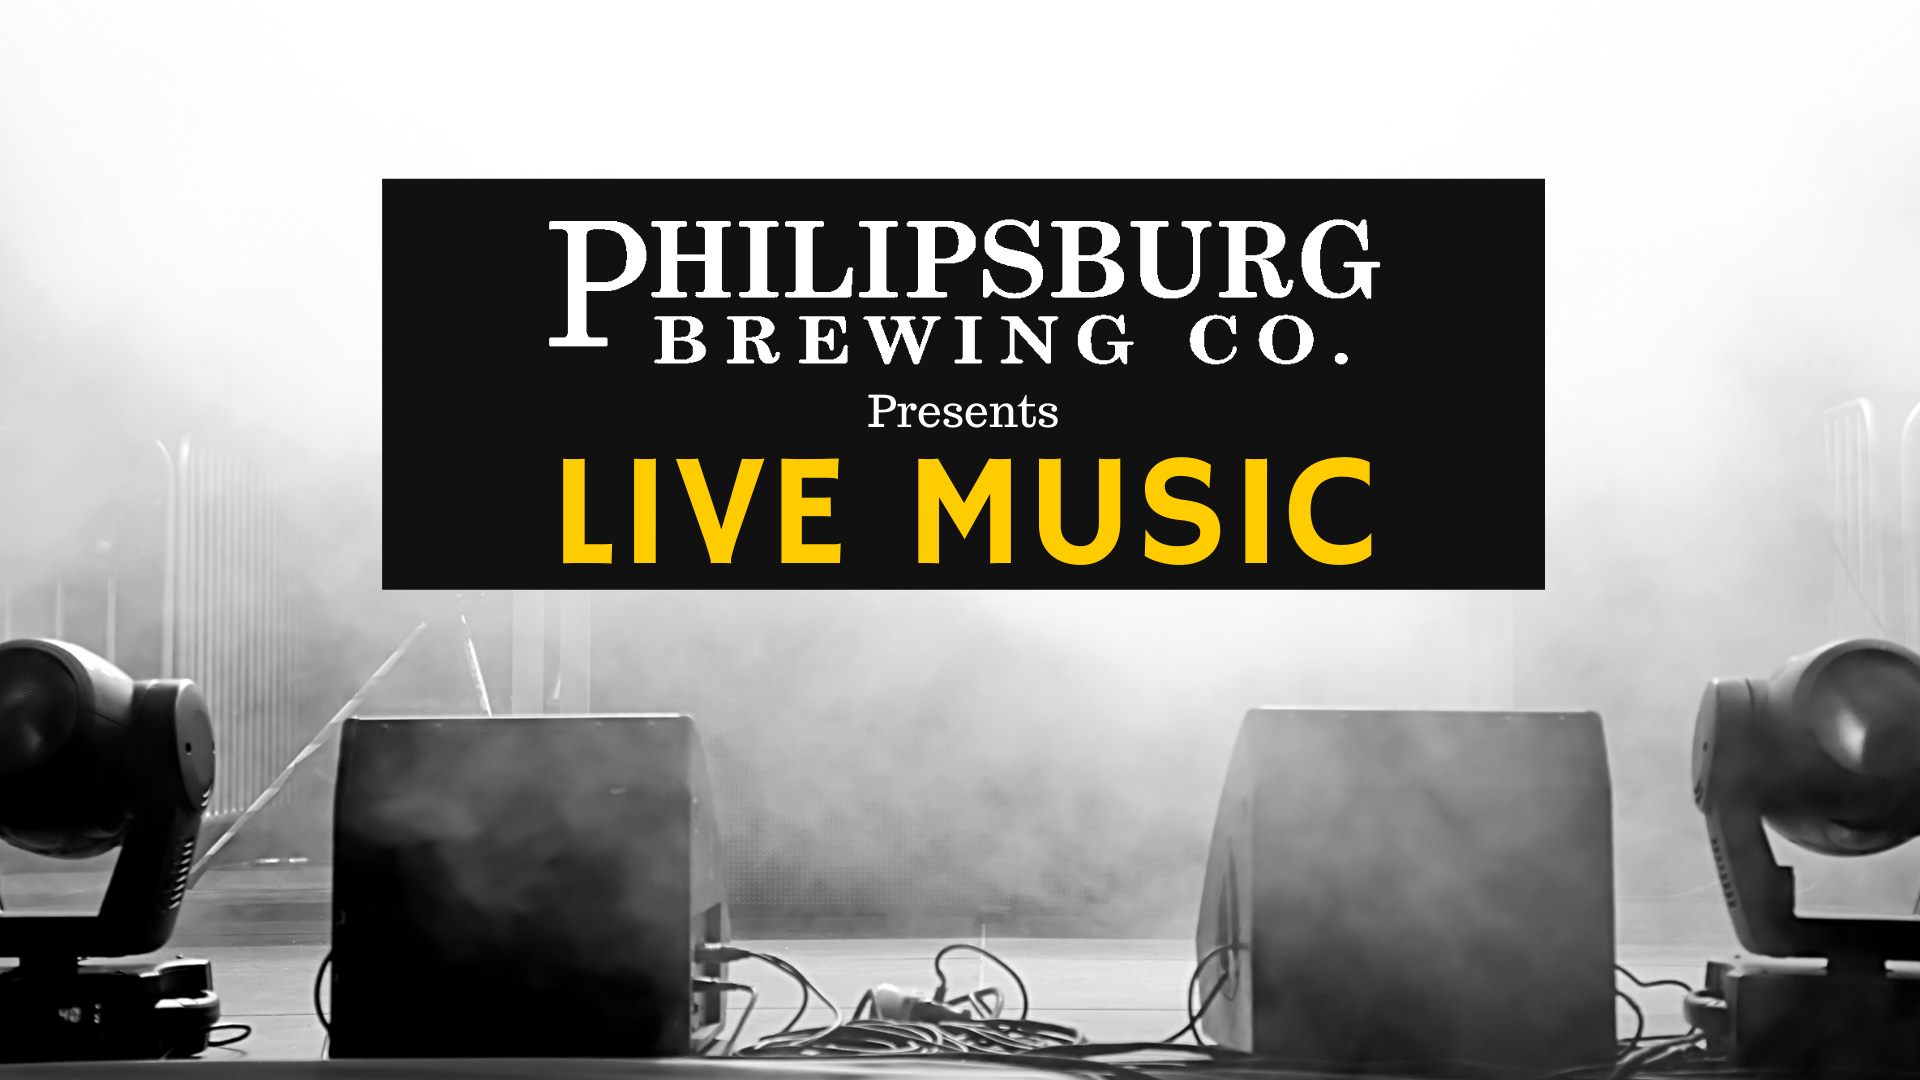 Philipsburg Brewing Company